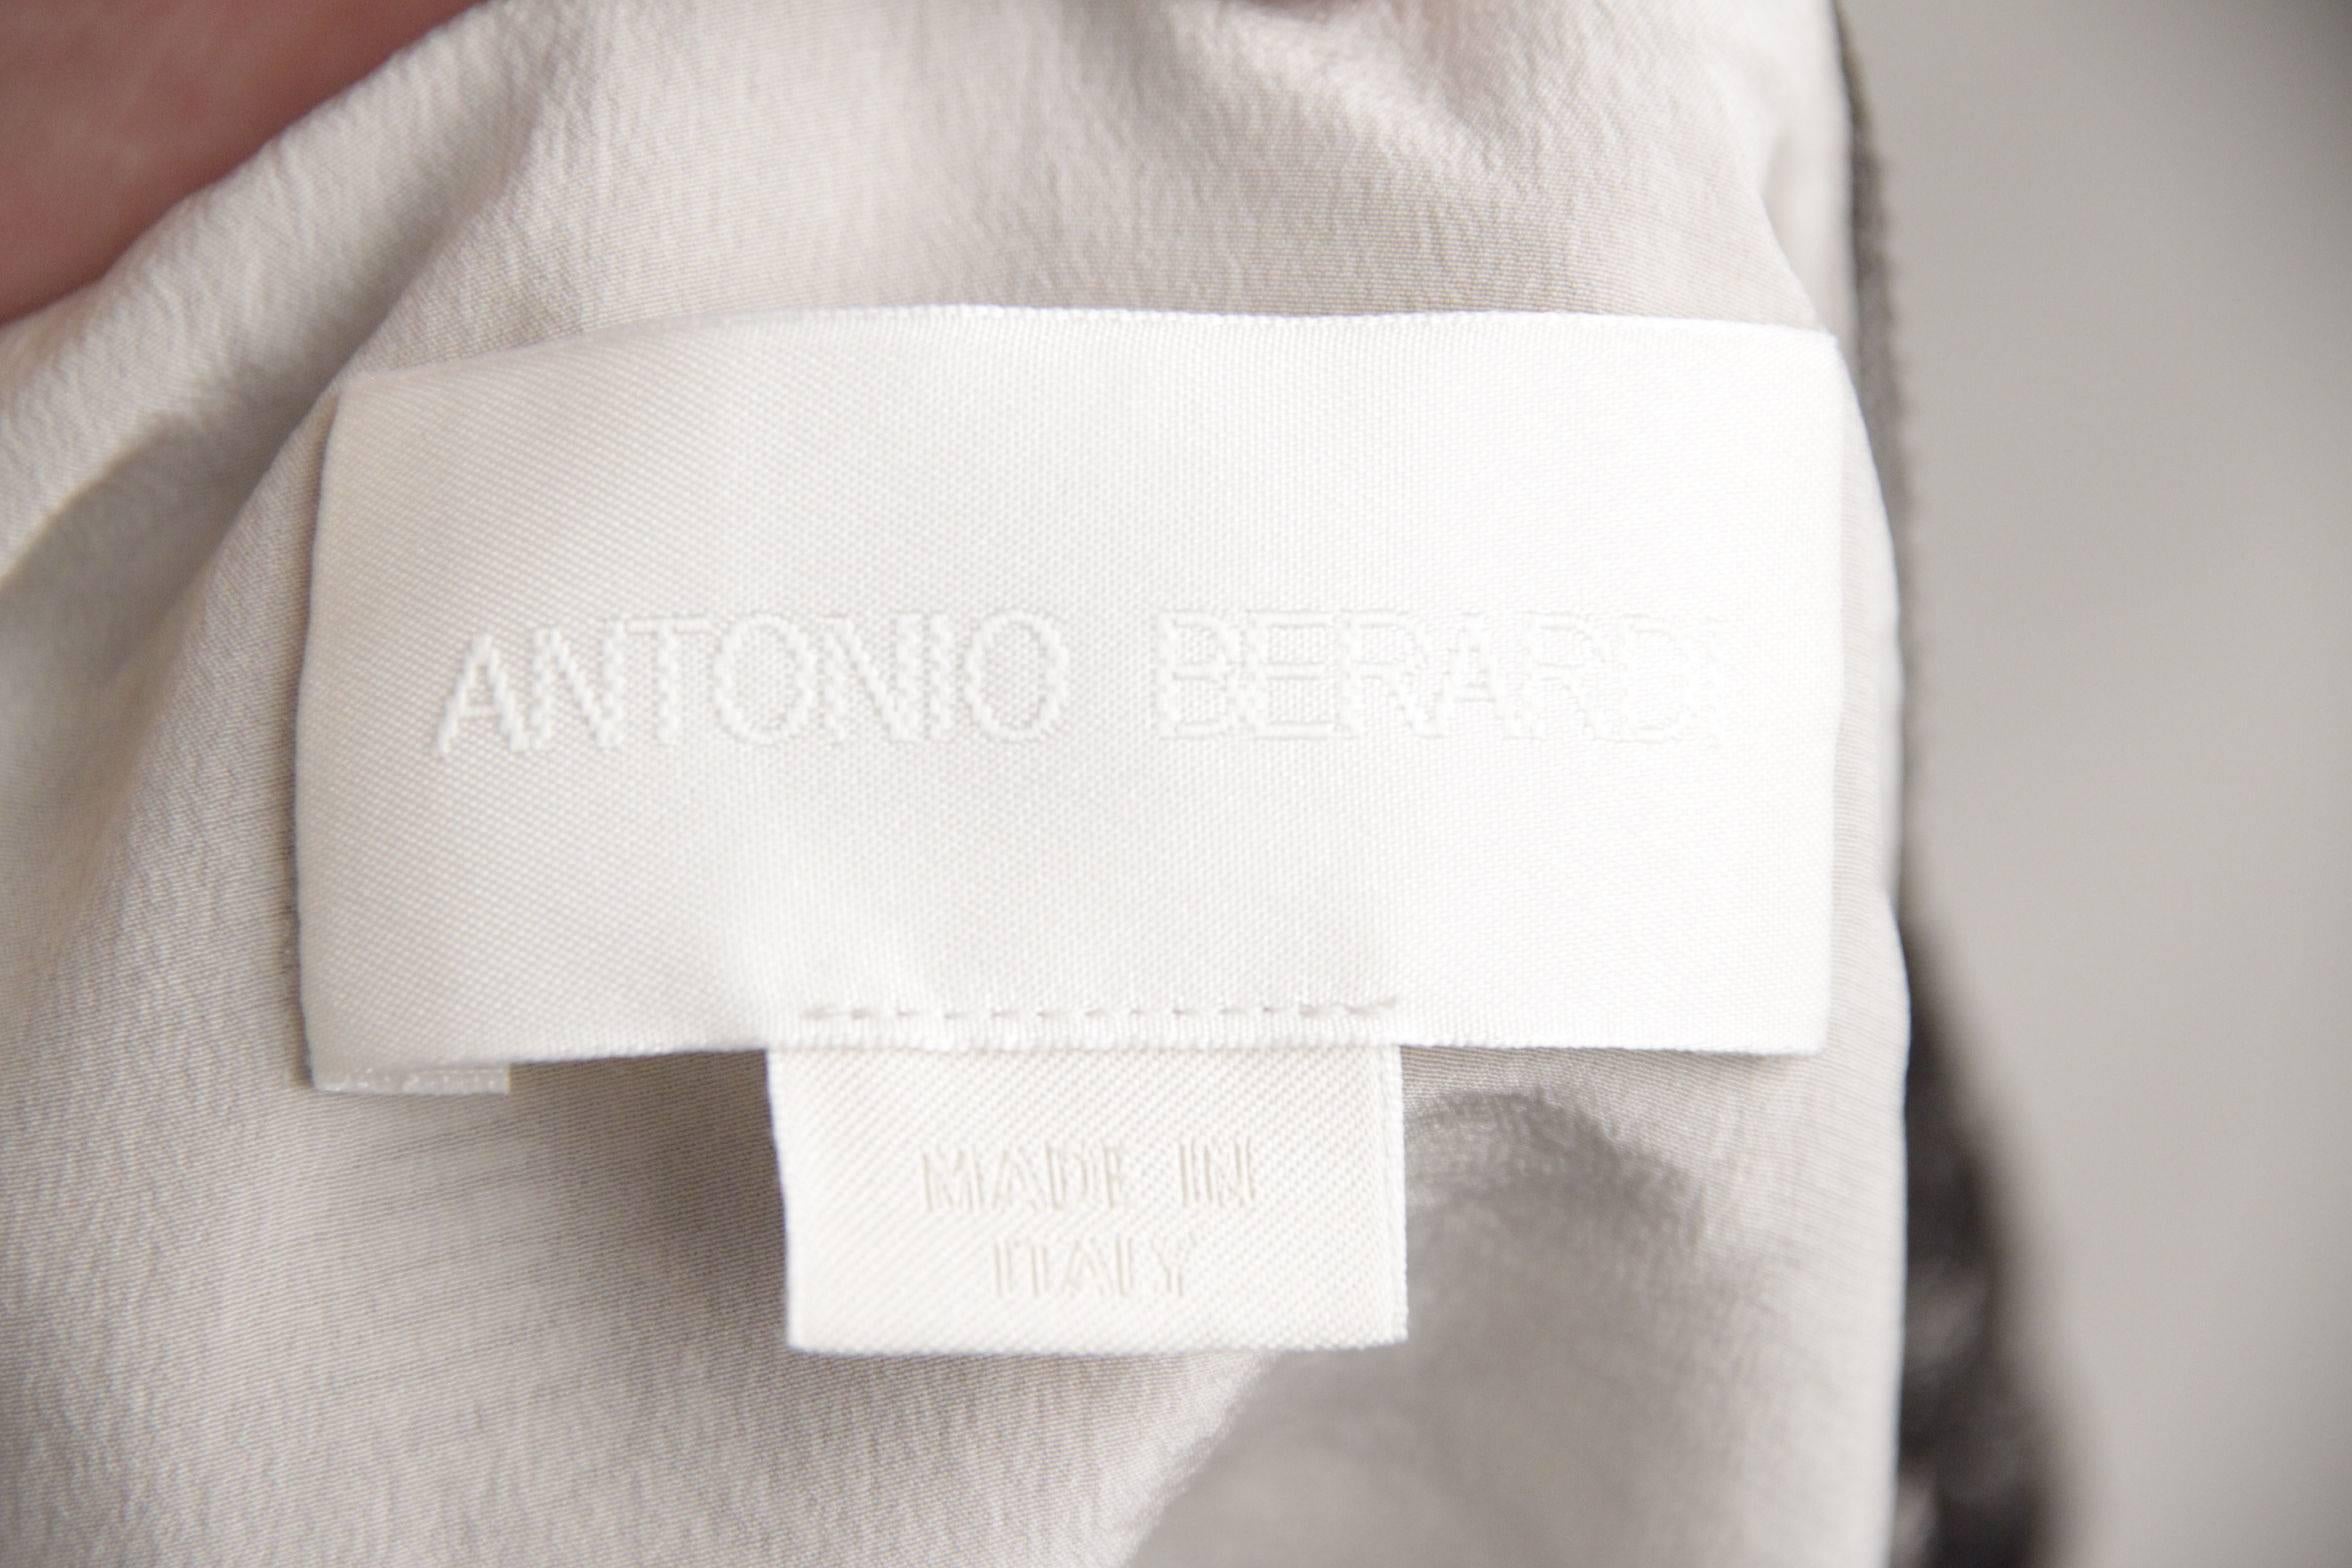 ANTONIO BERARDI Off White Silky SHEATH DRESS & BOLERO Jacket w/ Lace SIZE 44 4